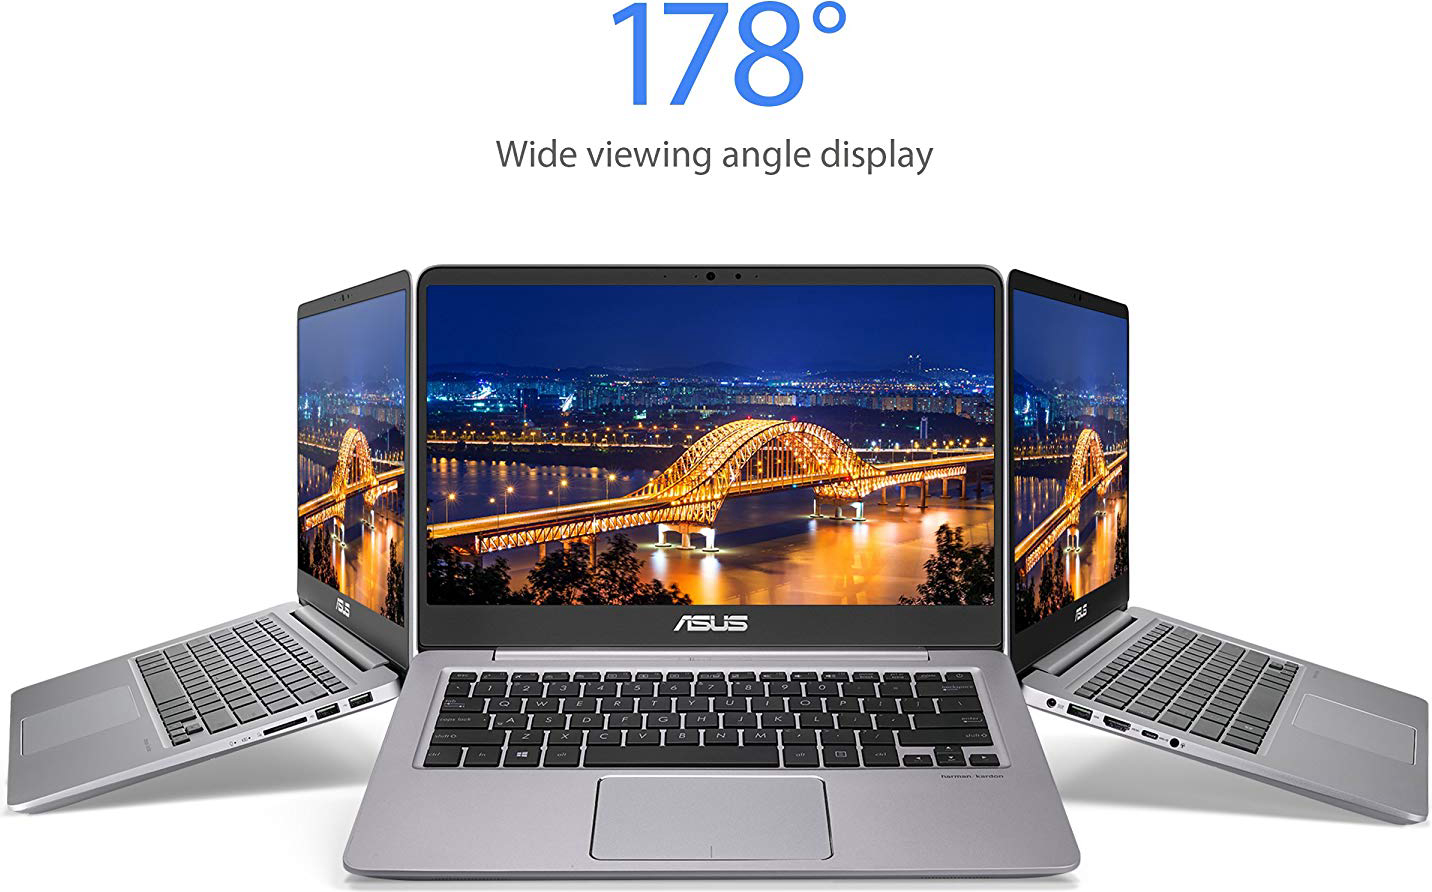 ASUS ZenBook Ultra-Slim Laptop - 14” FHD IPS WideView Display, Intel Core i7-8550U CPU, 8GB DDR4, 128GB SSD + 1TB HDD, Windows 10, Backlit keyboard, 3.1lbs, Quartz Grey - UX410UA-AS74